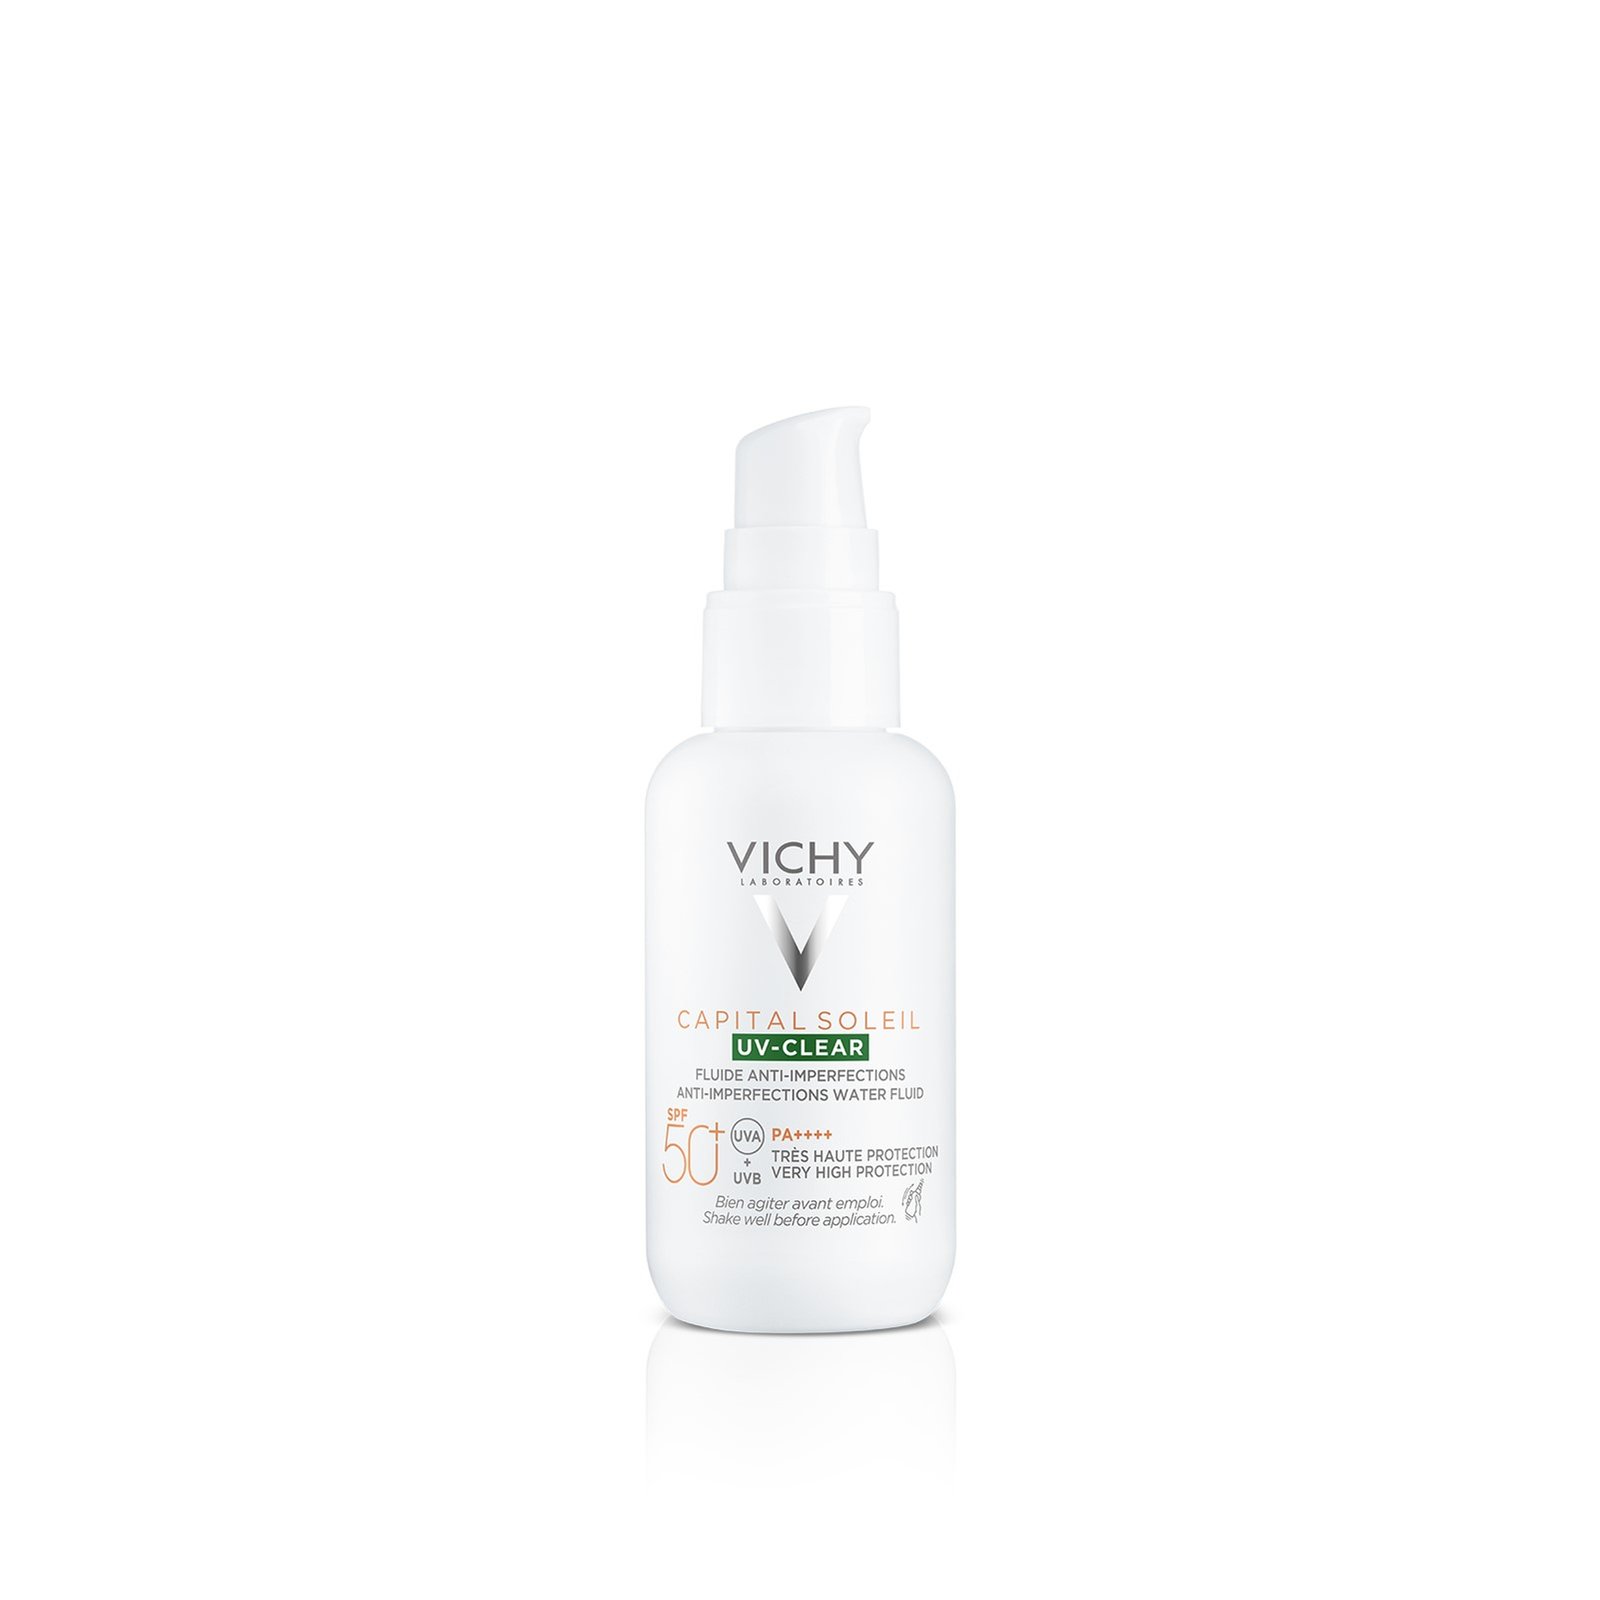 Vichy Capital Soleil UV-Clear Anti-Imperfections Water Fluid SPF50+ 40ml (1.35 fl oz)